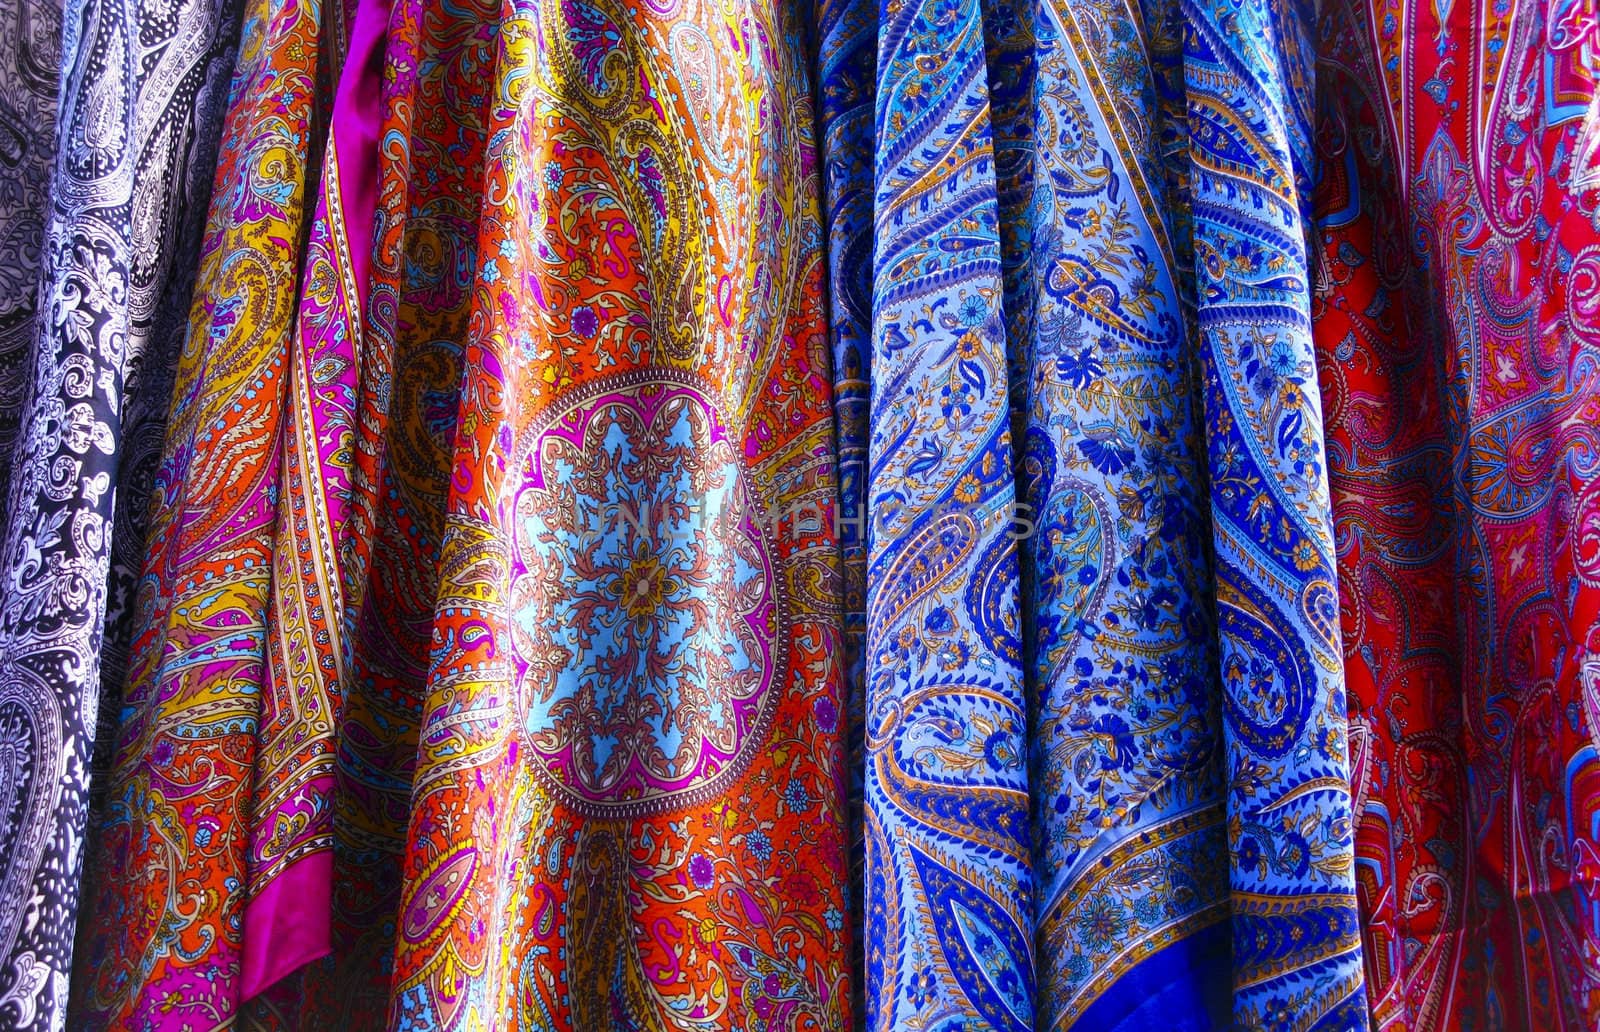 Closeup of severl dresses by ADavis